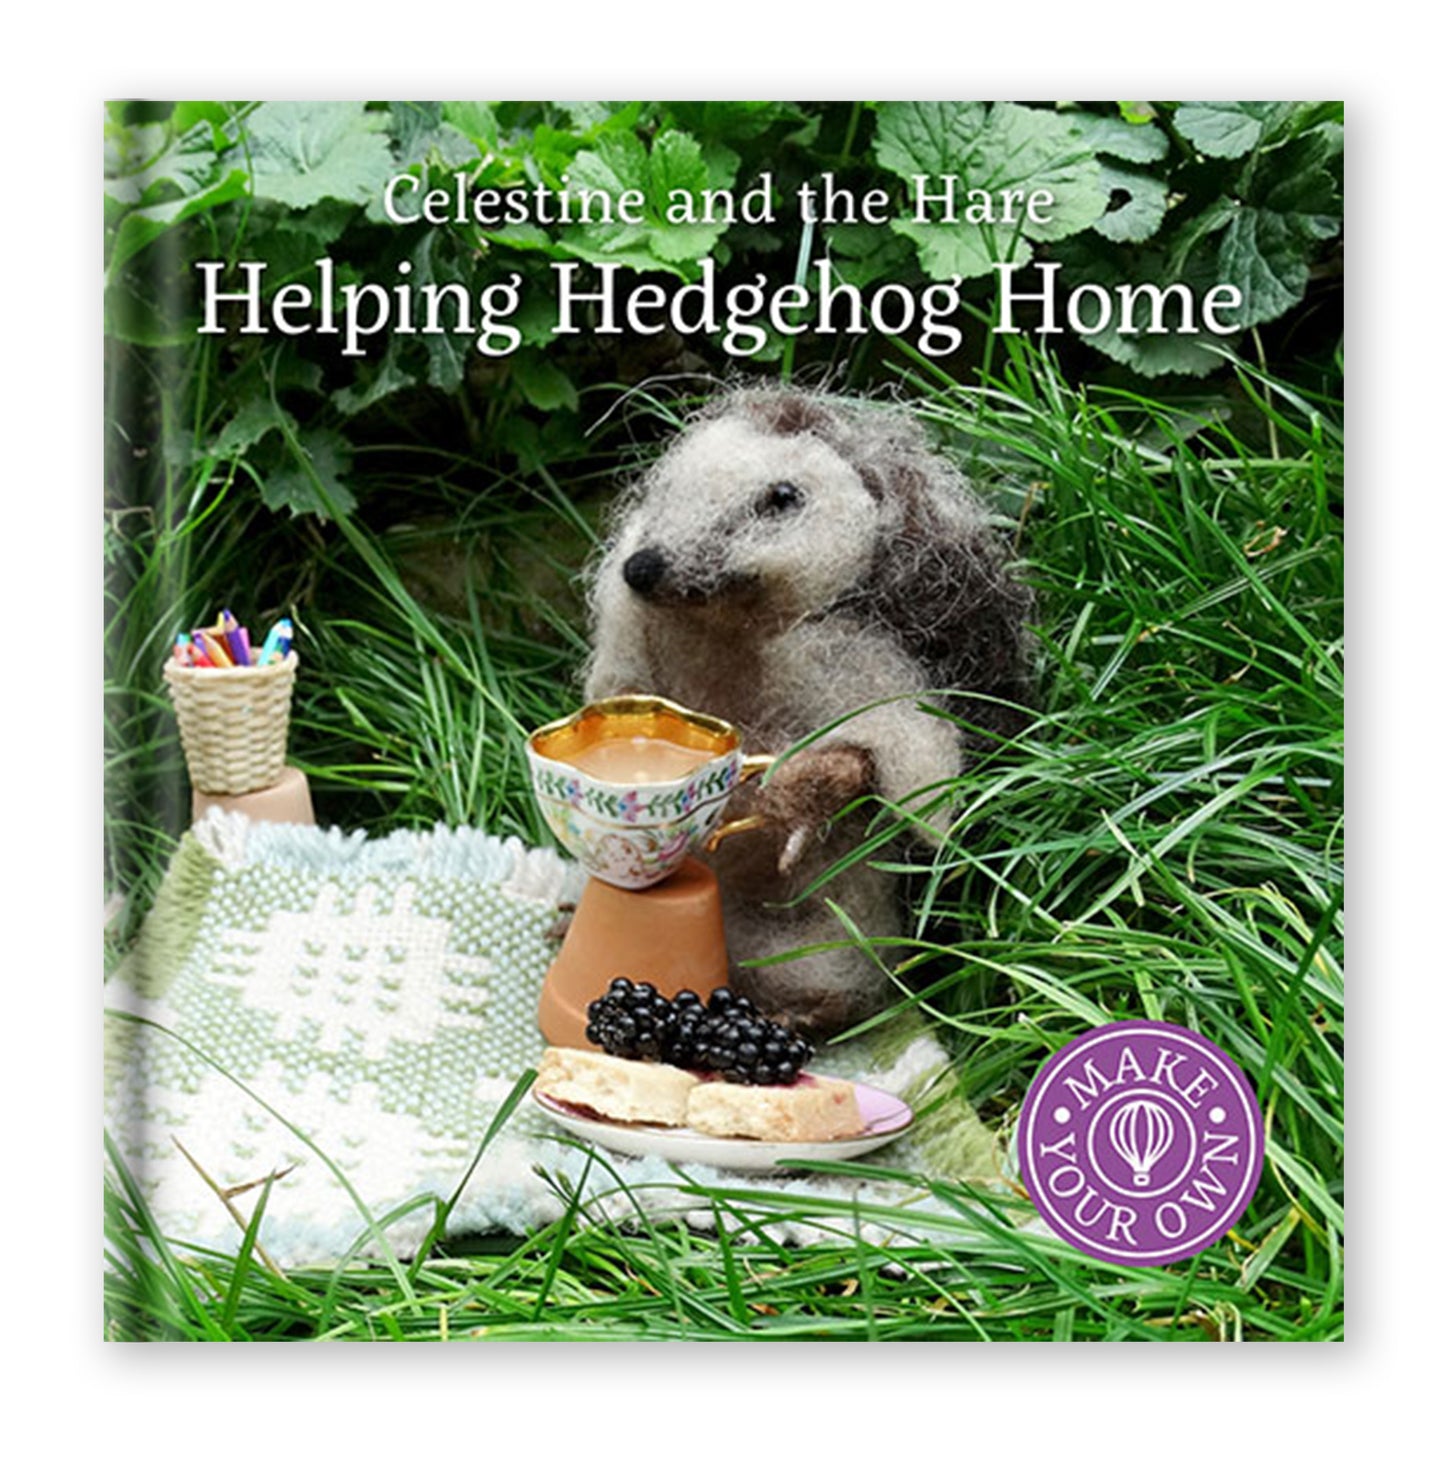 Helping Hedgehog Home